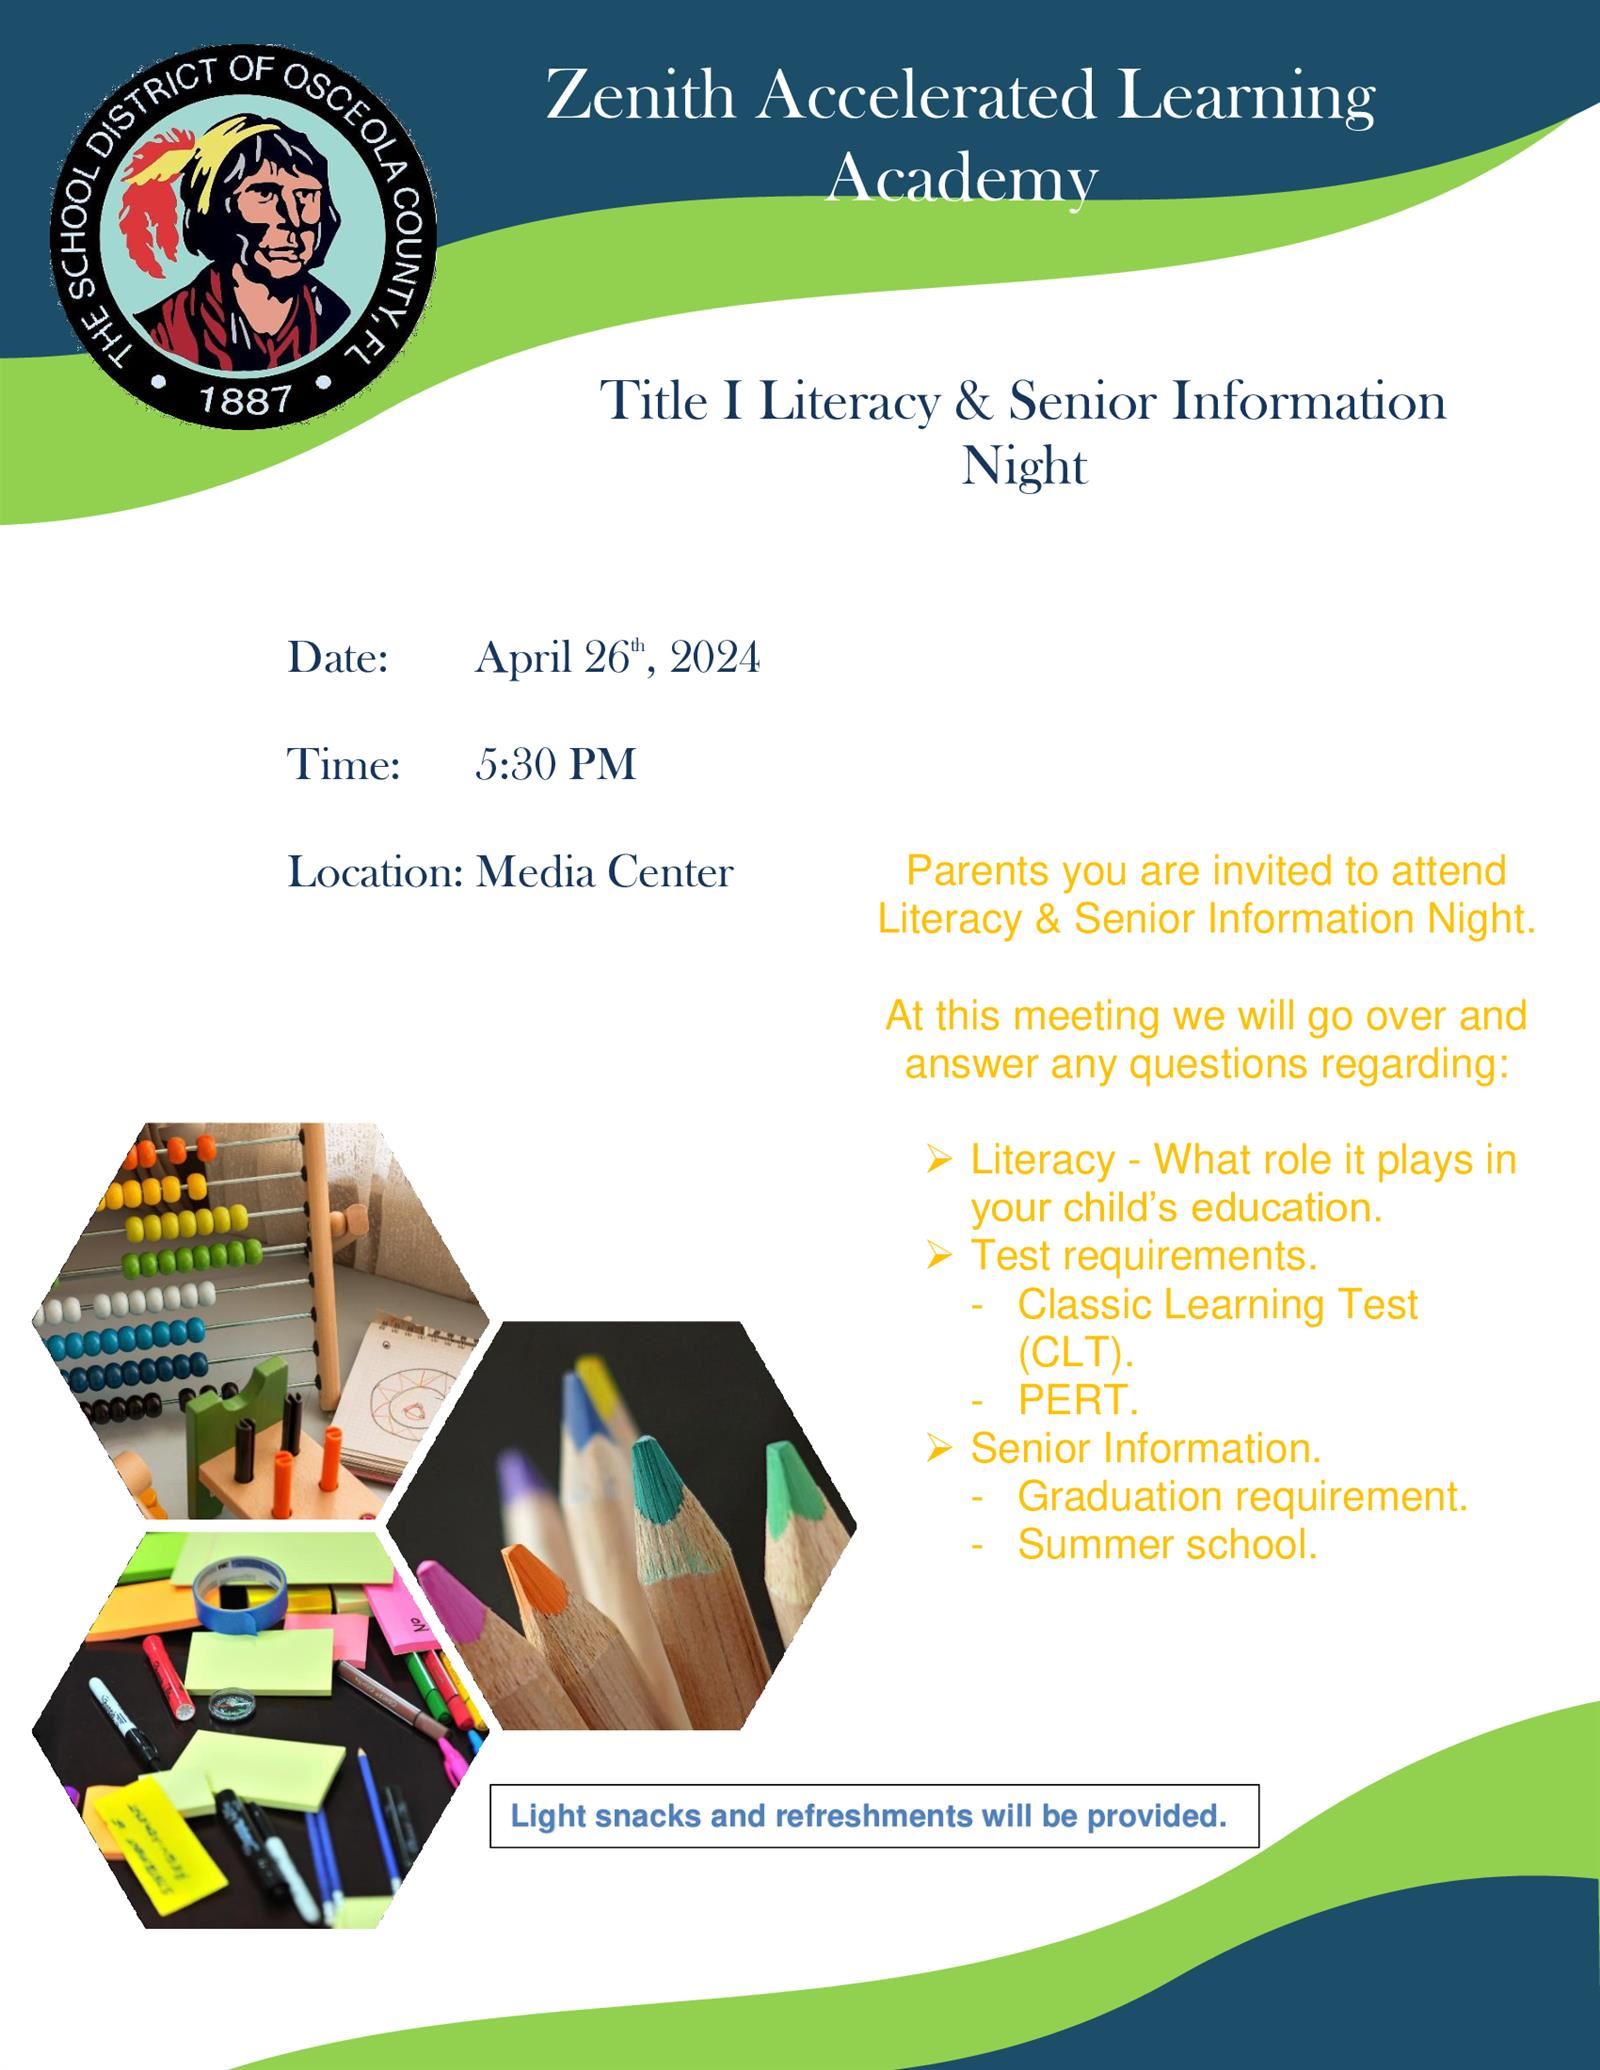  Title I Literacy & Senior Information Night